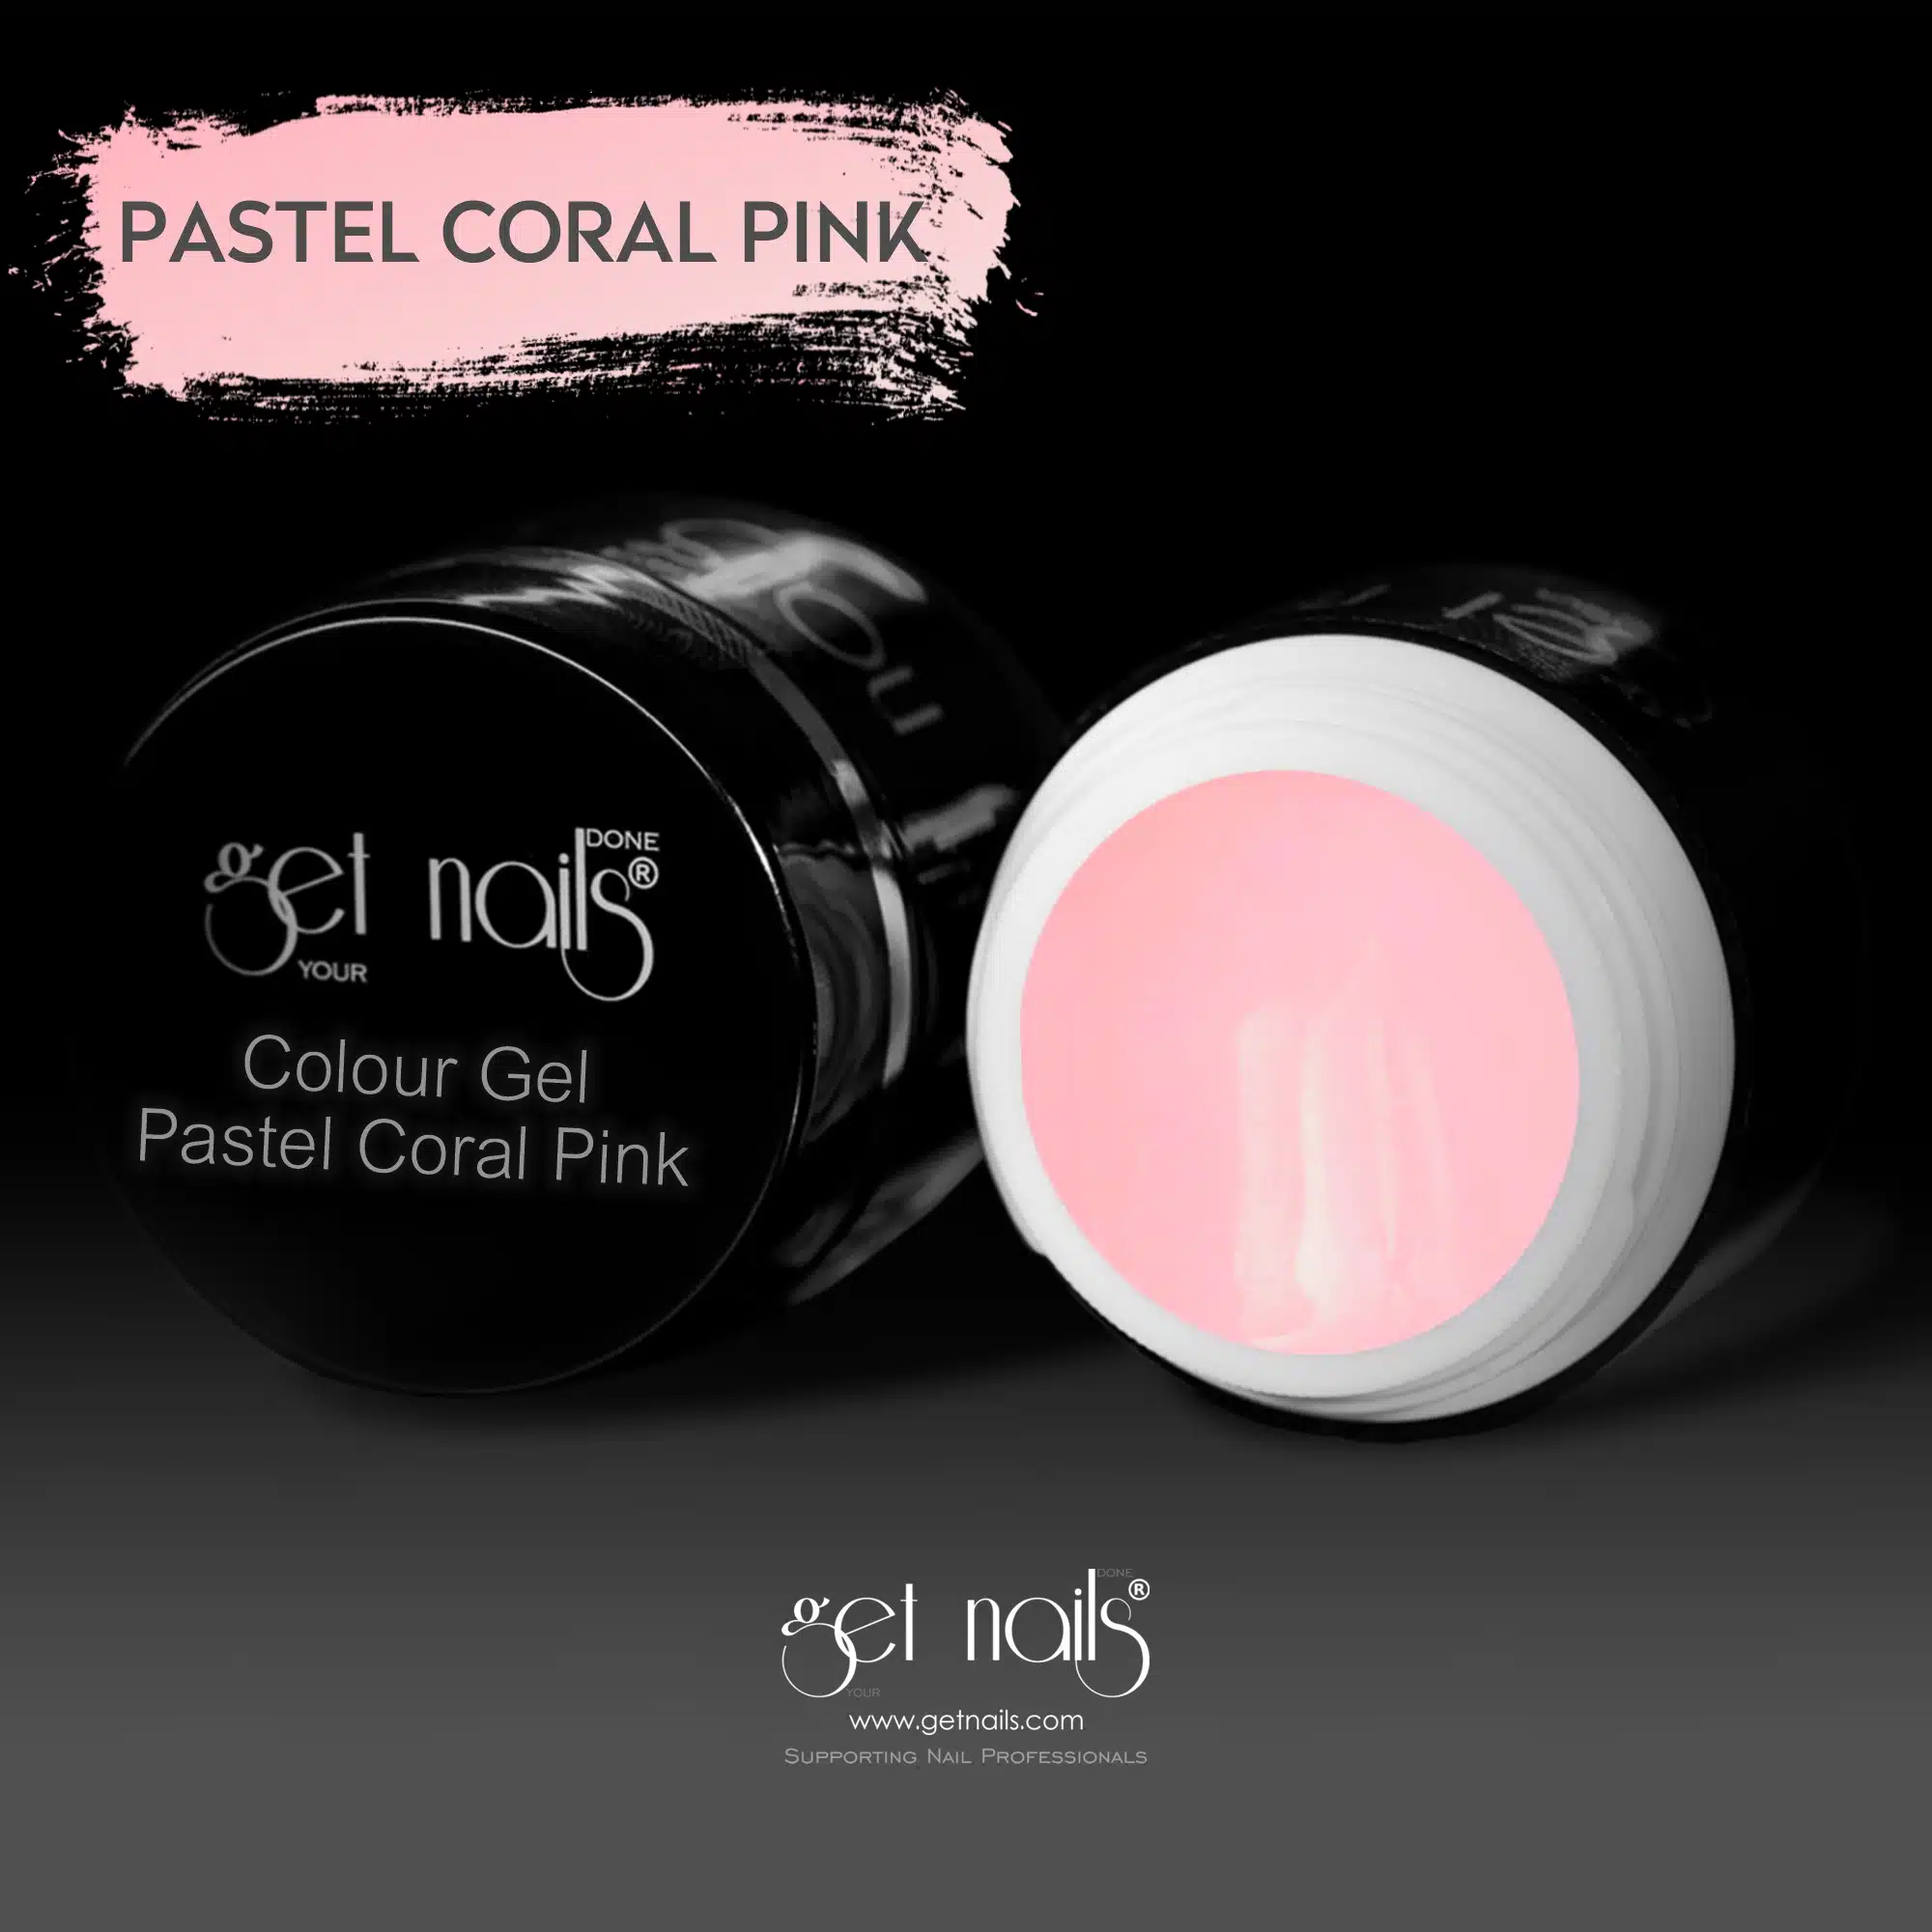 Get Nails Austria - Color Gel Pasztell Coral Pink 5g